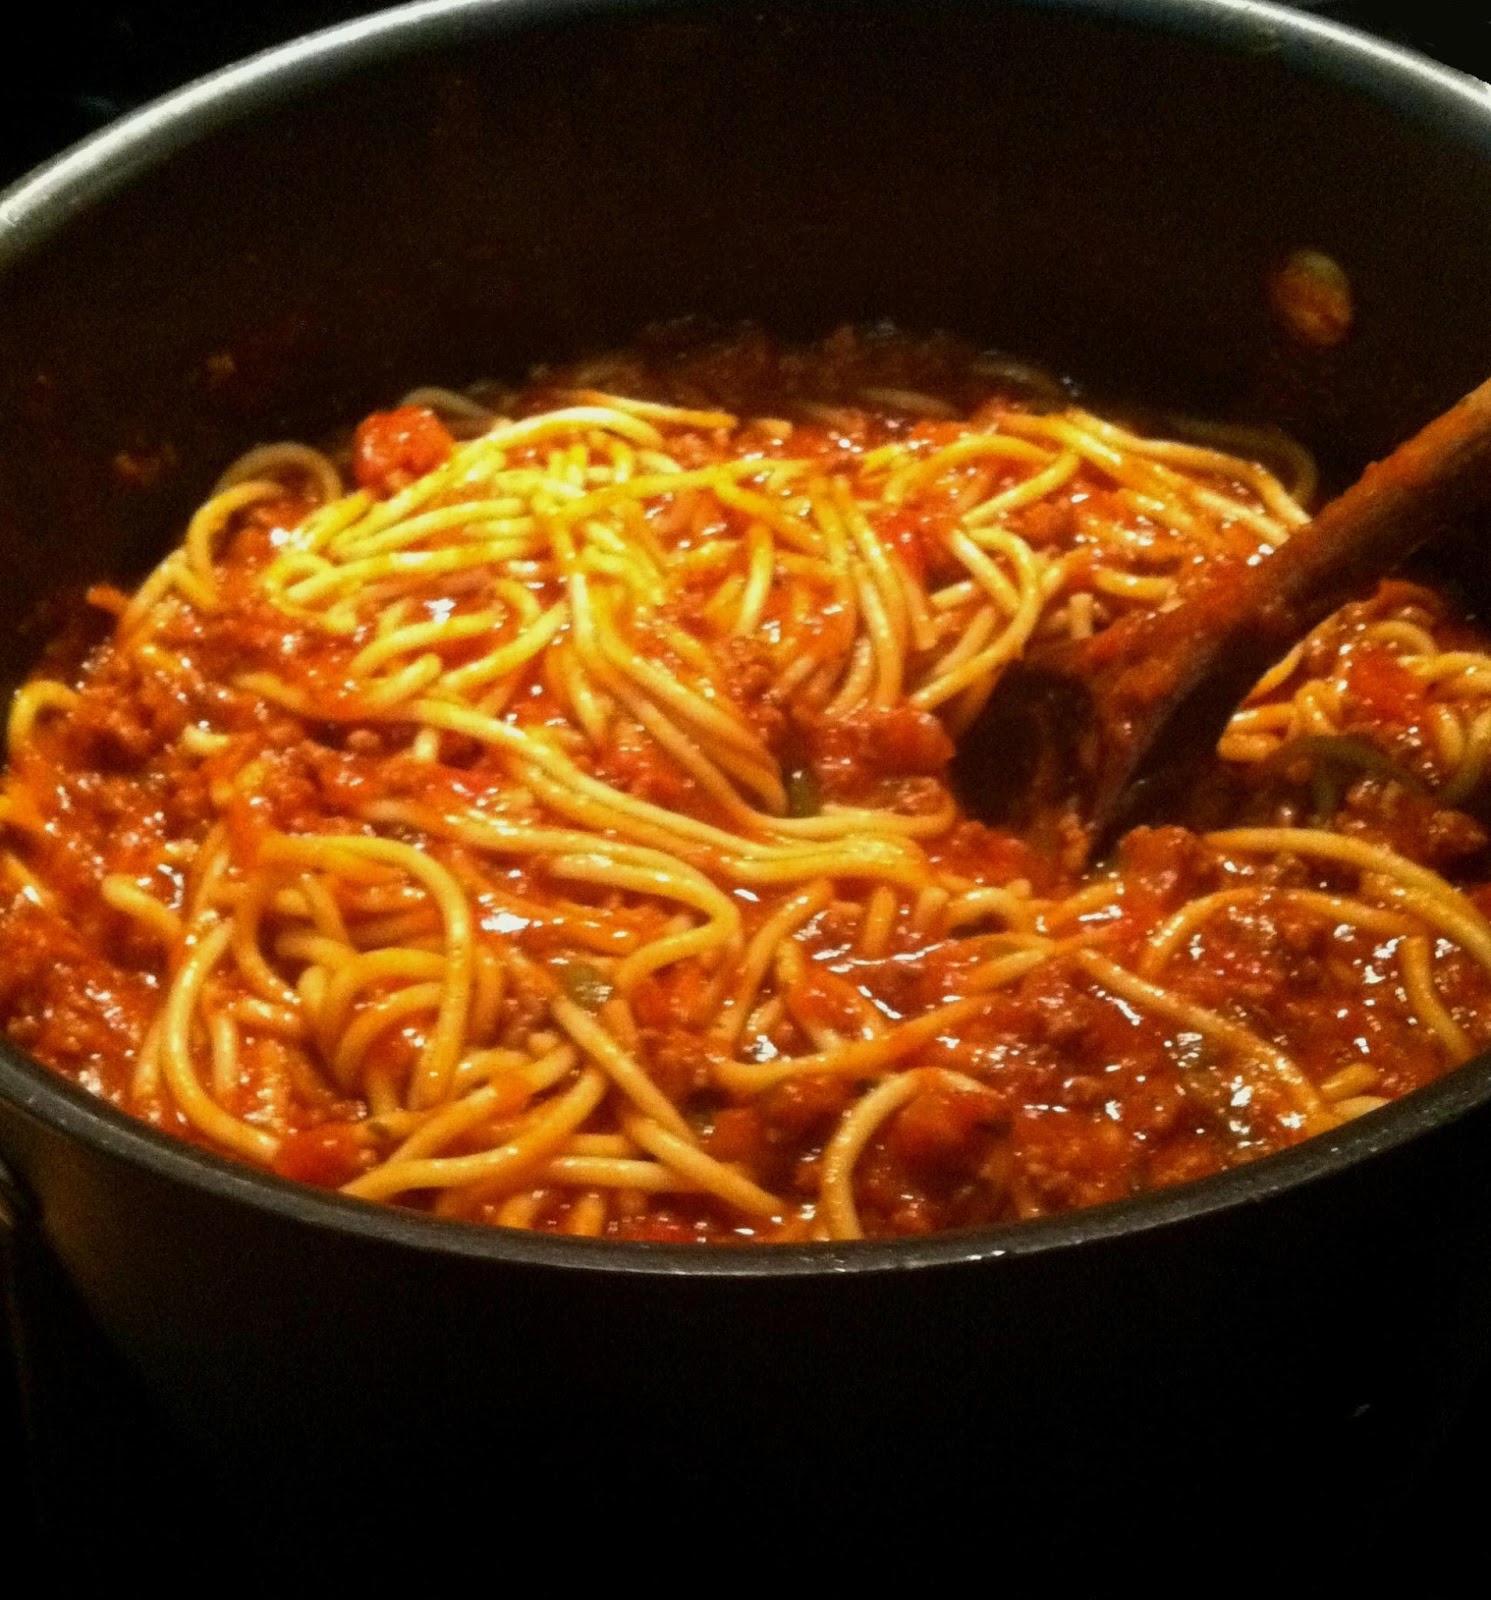 Some spaghetti. Спагетти по домашнему. Макароны с подливкой домашний. Спагетти на сковороде. Подливка к спагетти в сковороде.